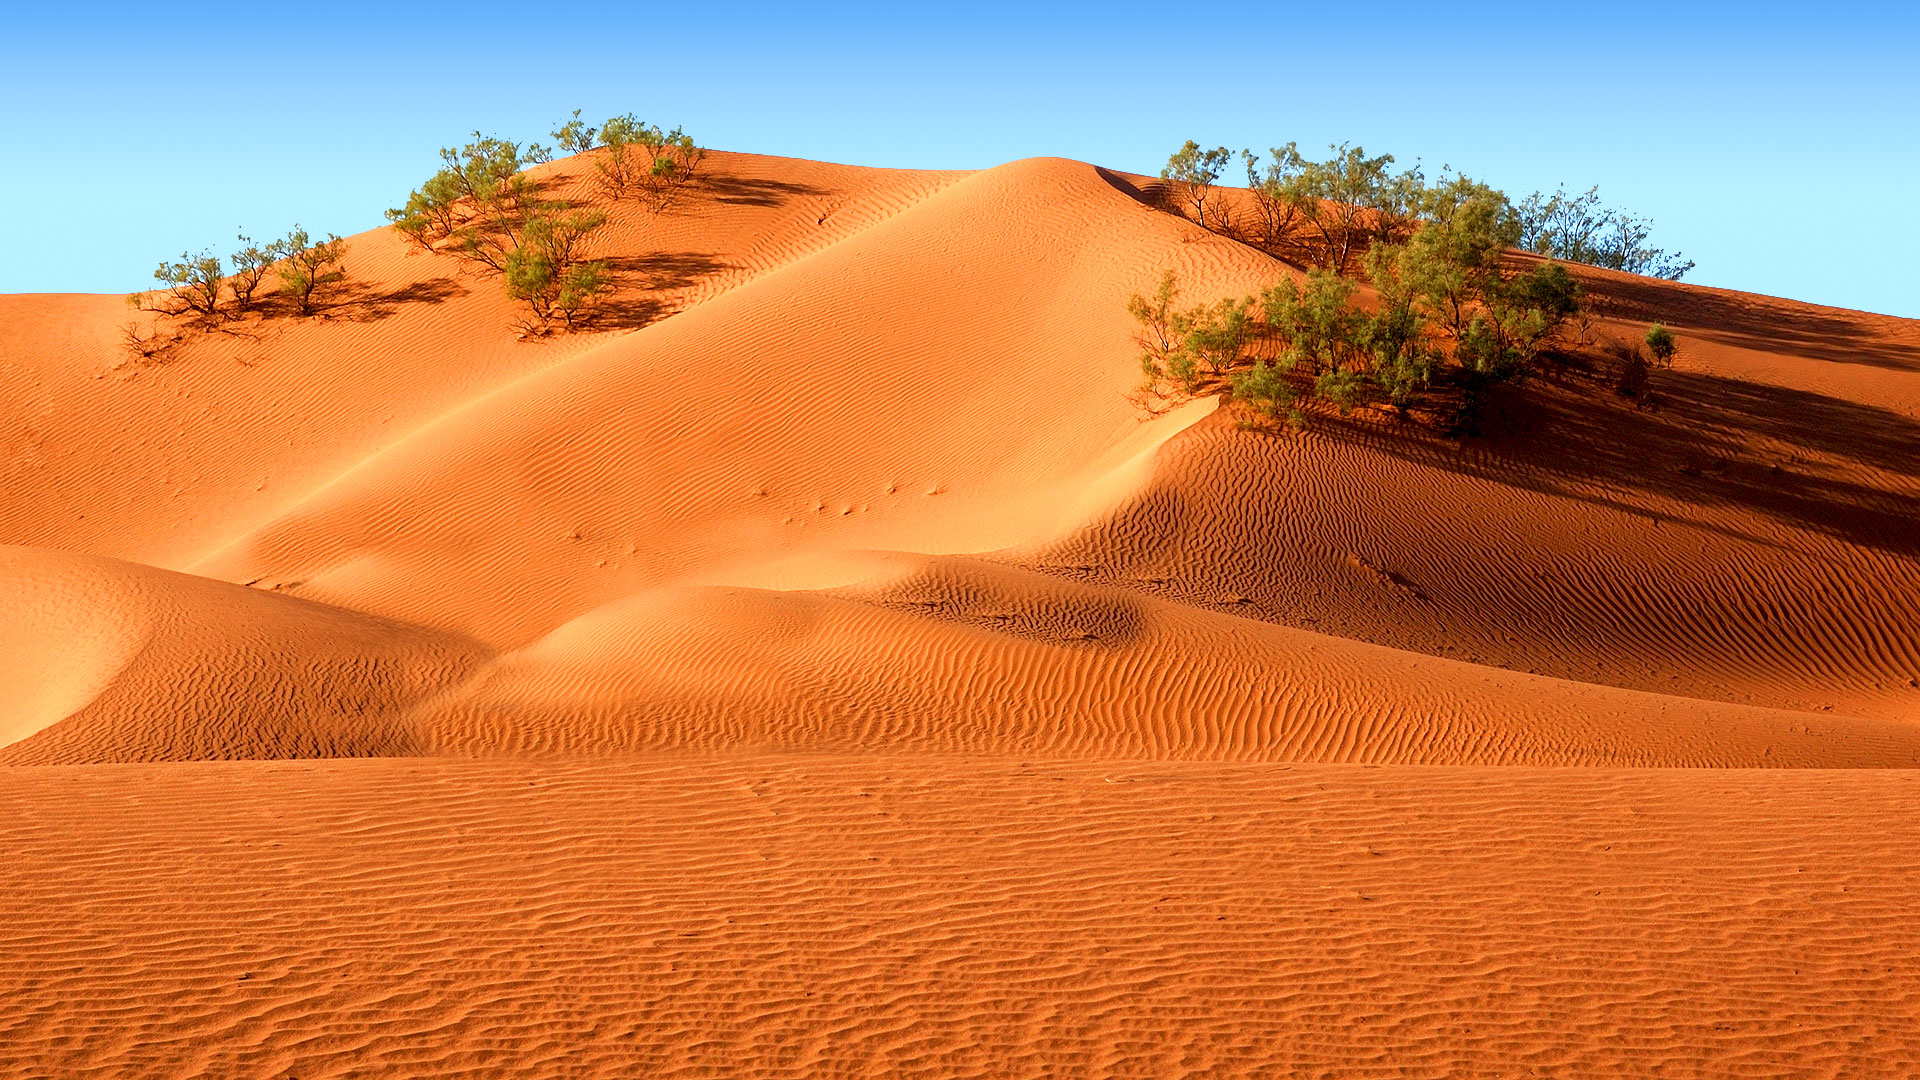 Maroc, les impressionnantes dunes orangées